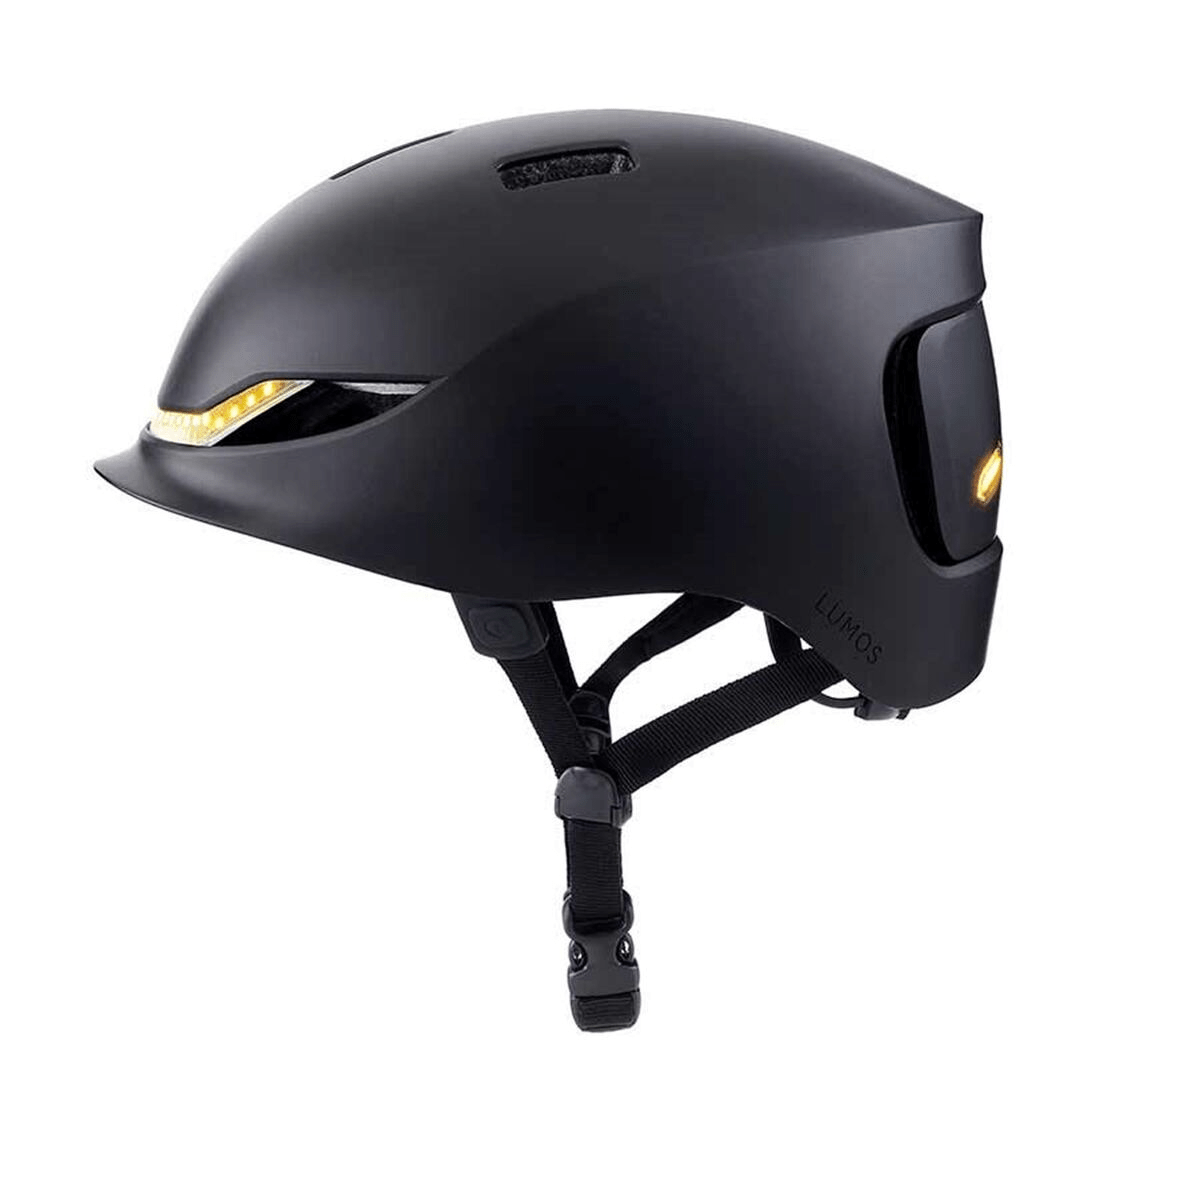 Lumos Street Helmet Black Apparel - Apparel Accessories - Helmets - Road